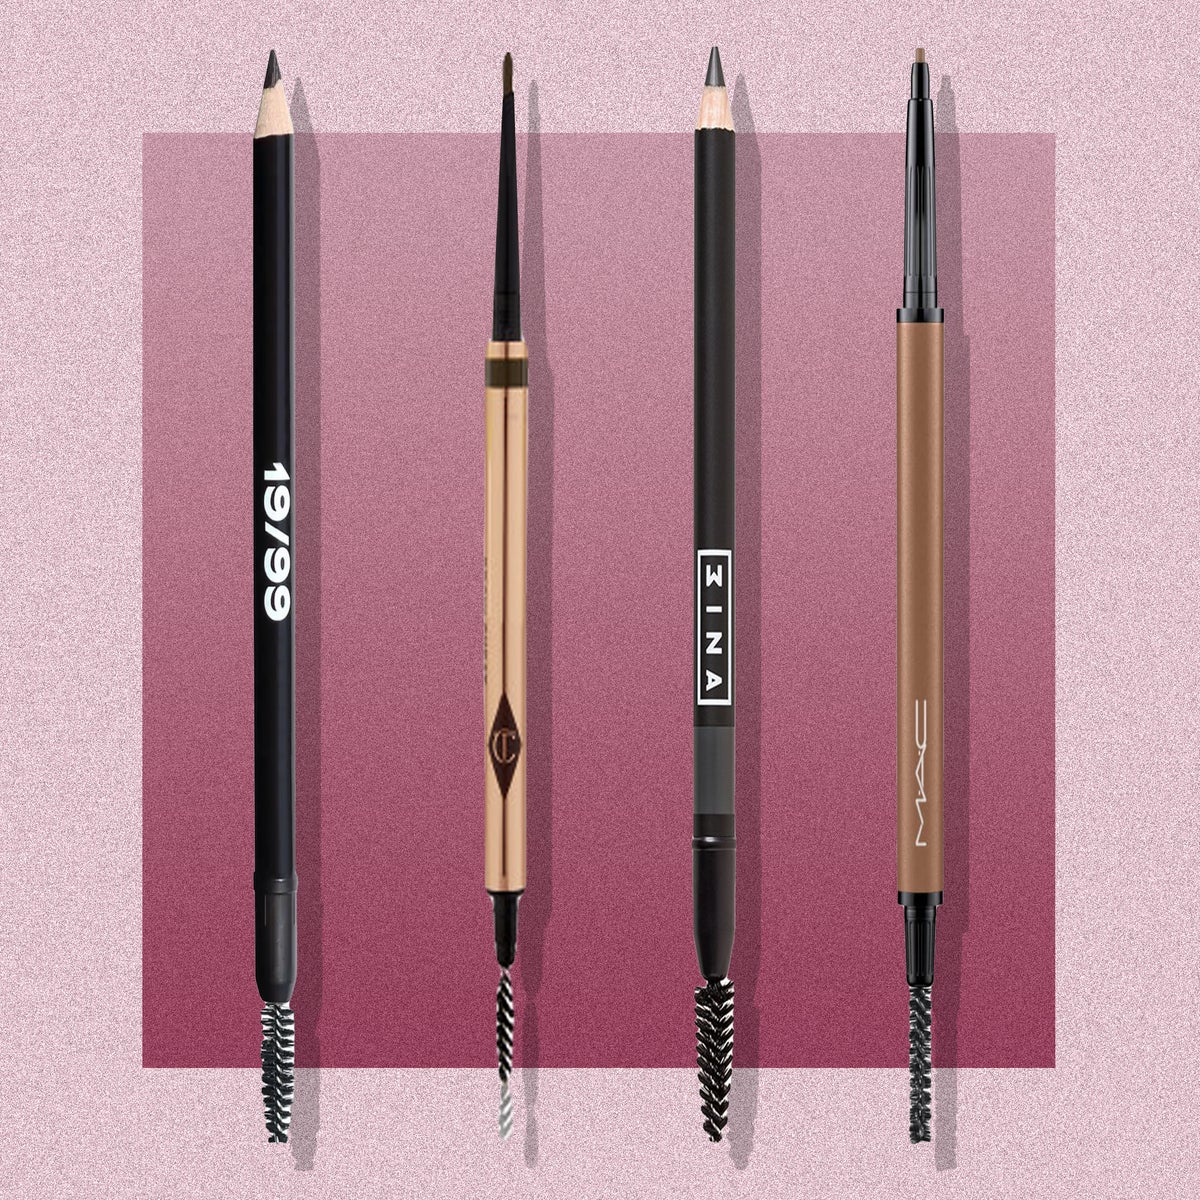 BRAND NEW, Sleek Micro-Fine Eye Brow Pencil - Boxed - Choose Your Shade